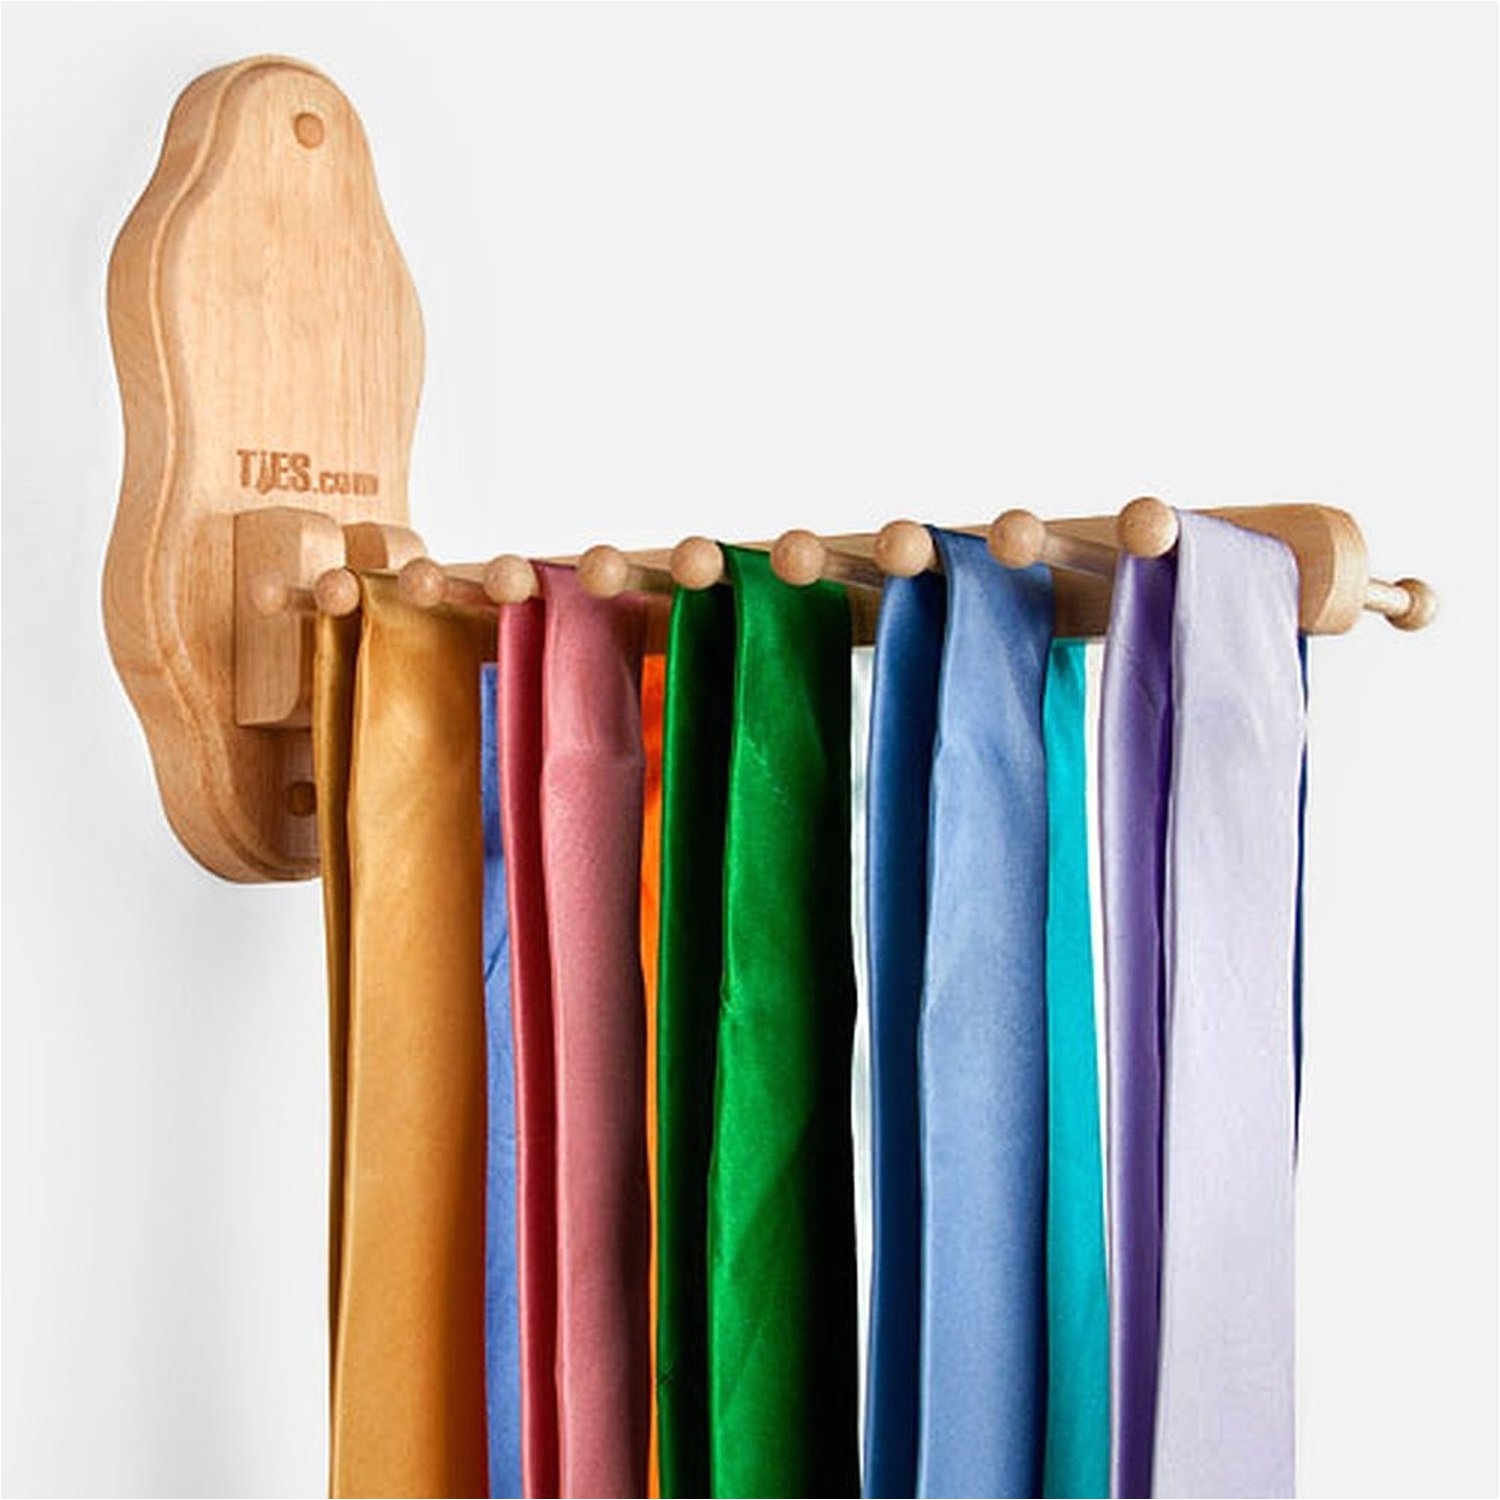 sunglass storage ideas diy tie rack wardrobe closet for small spaces